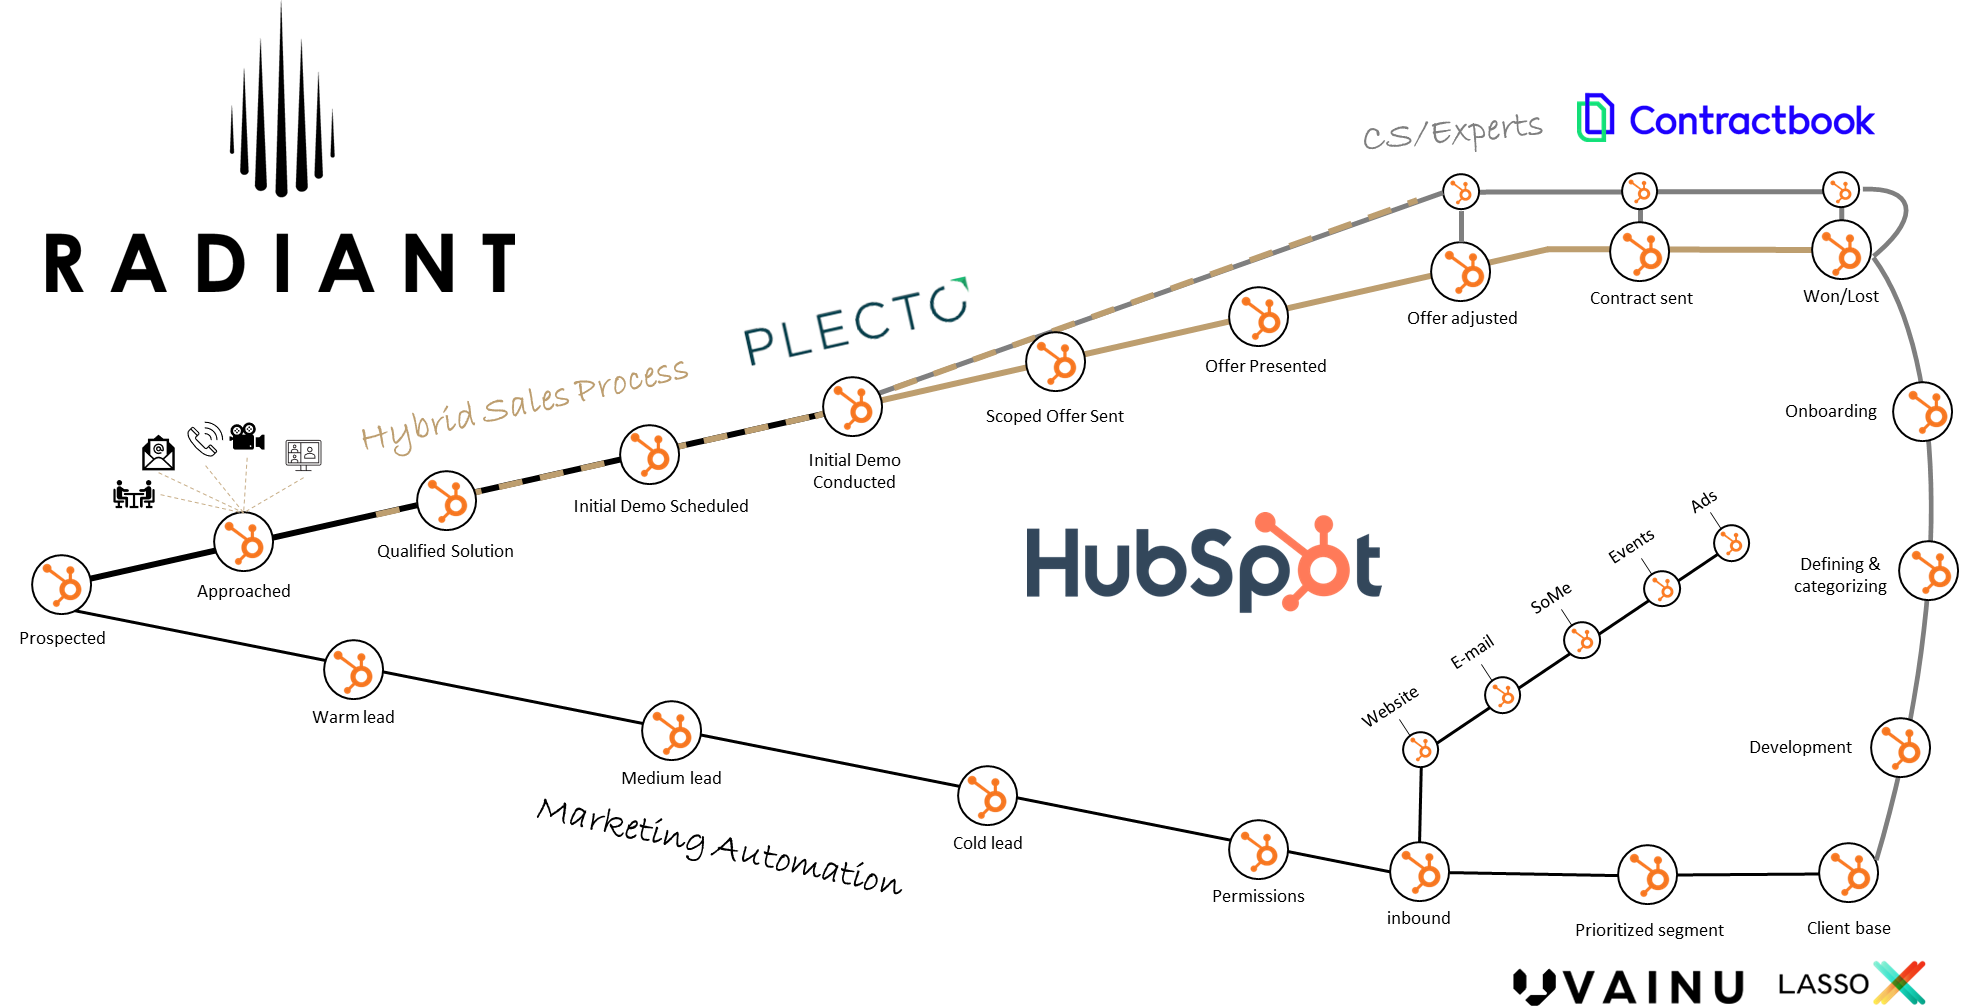 HubSpot Implementation: The HubSpot Ecosystem